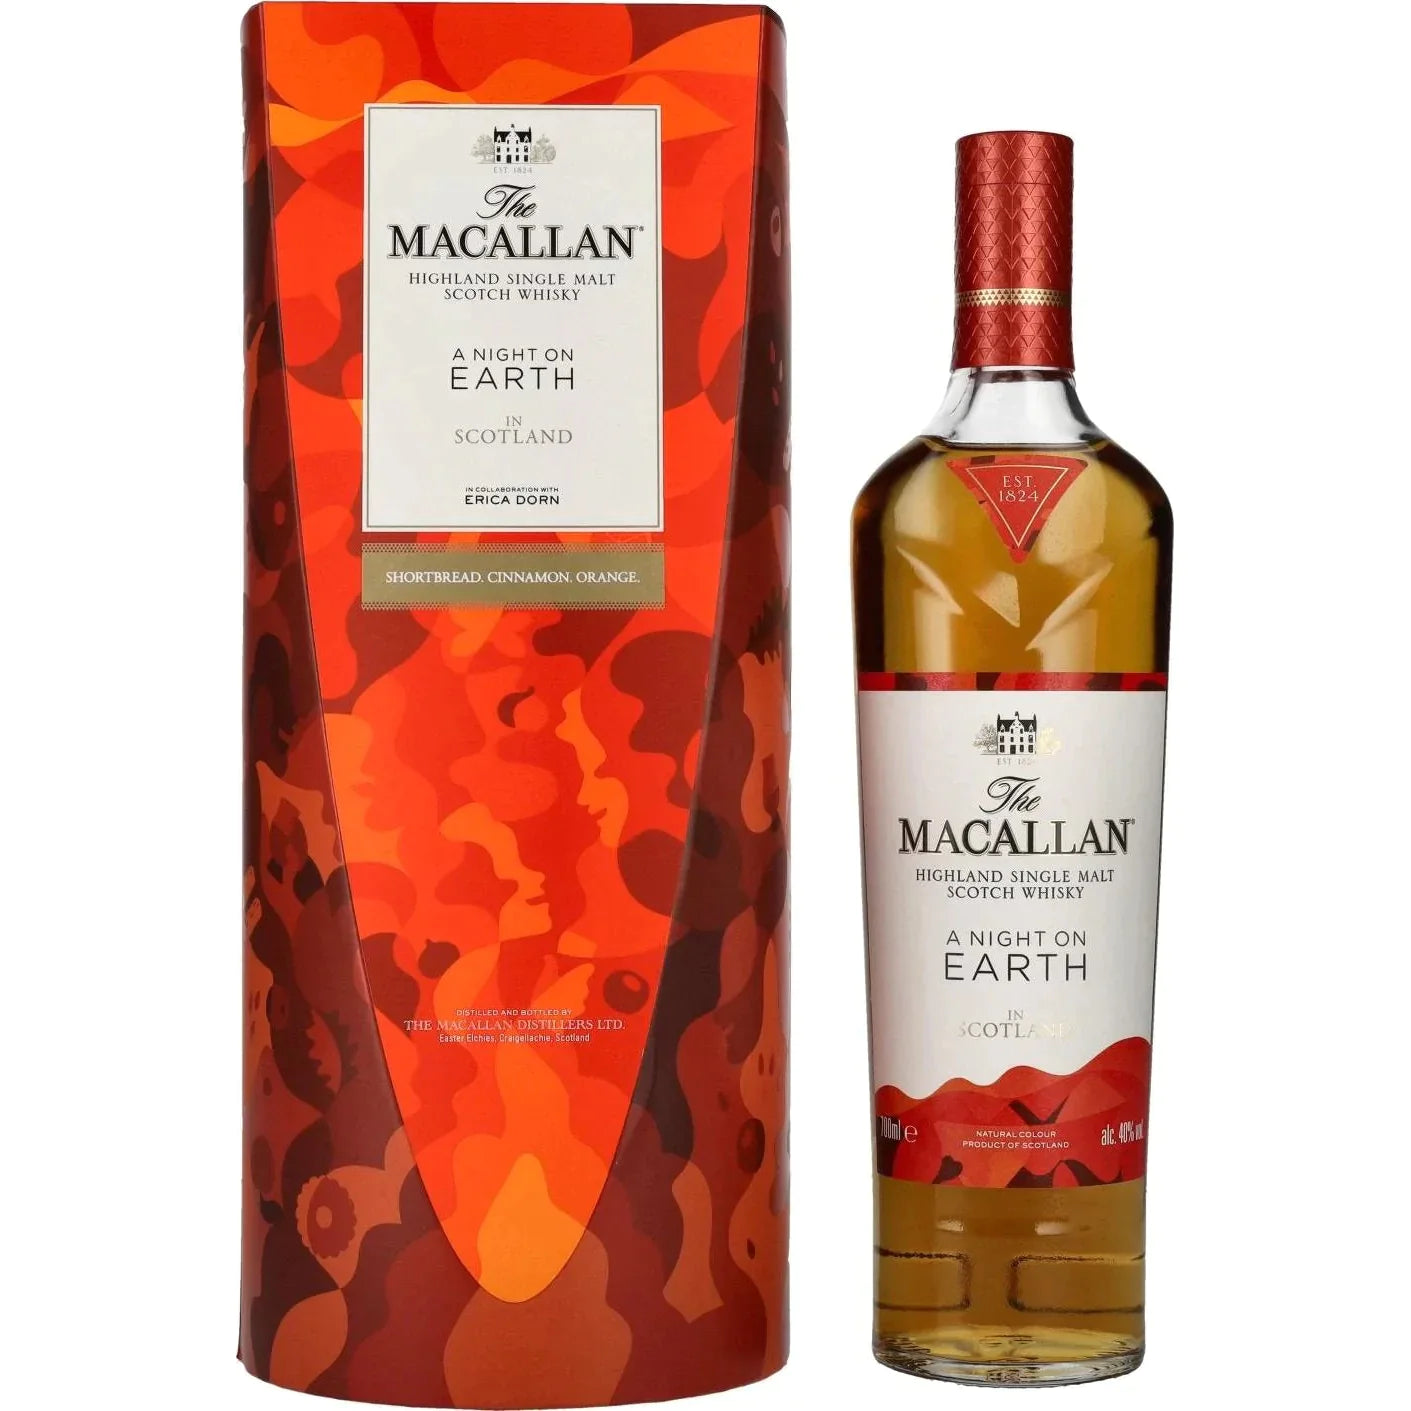 The Macallan A NIGHT ON EARTH Highland Single Malt 40% Vol. 0,7l in Giftbox